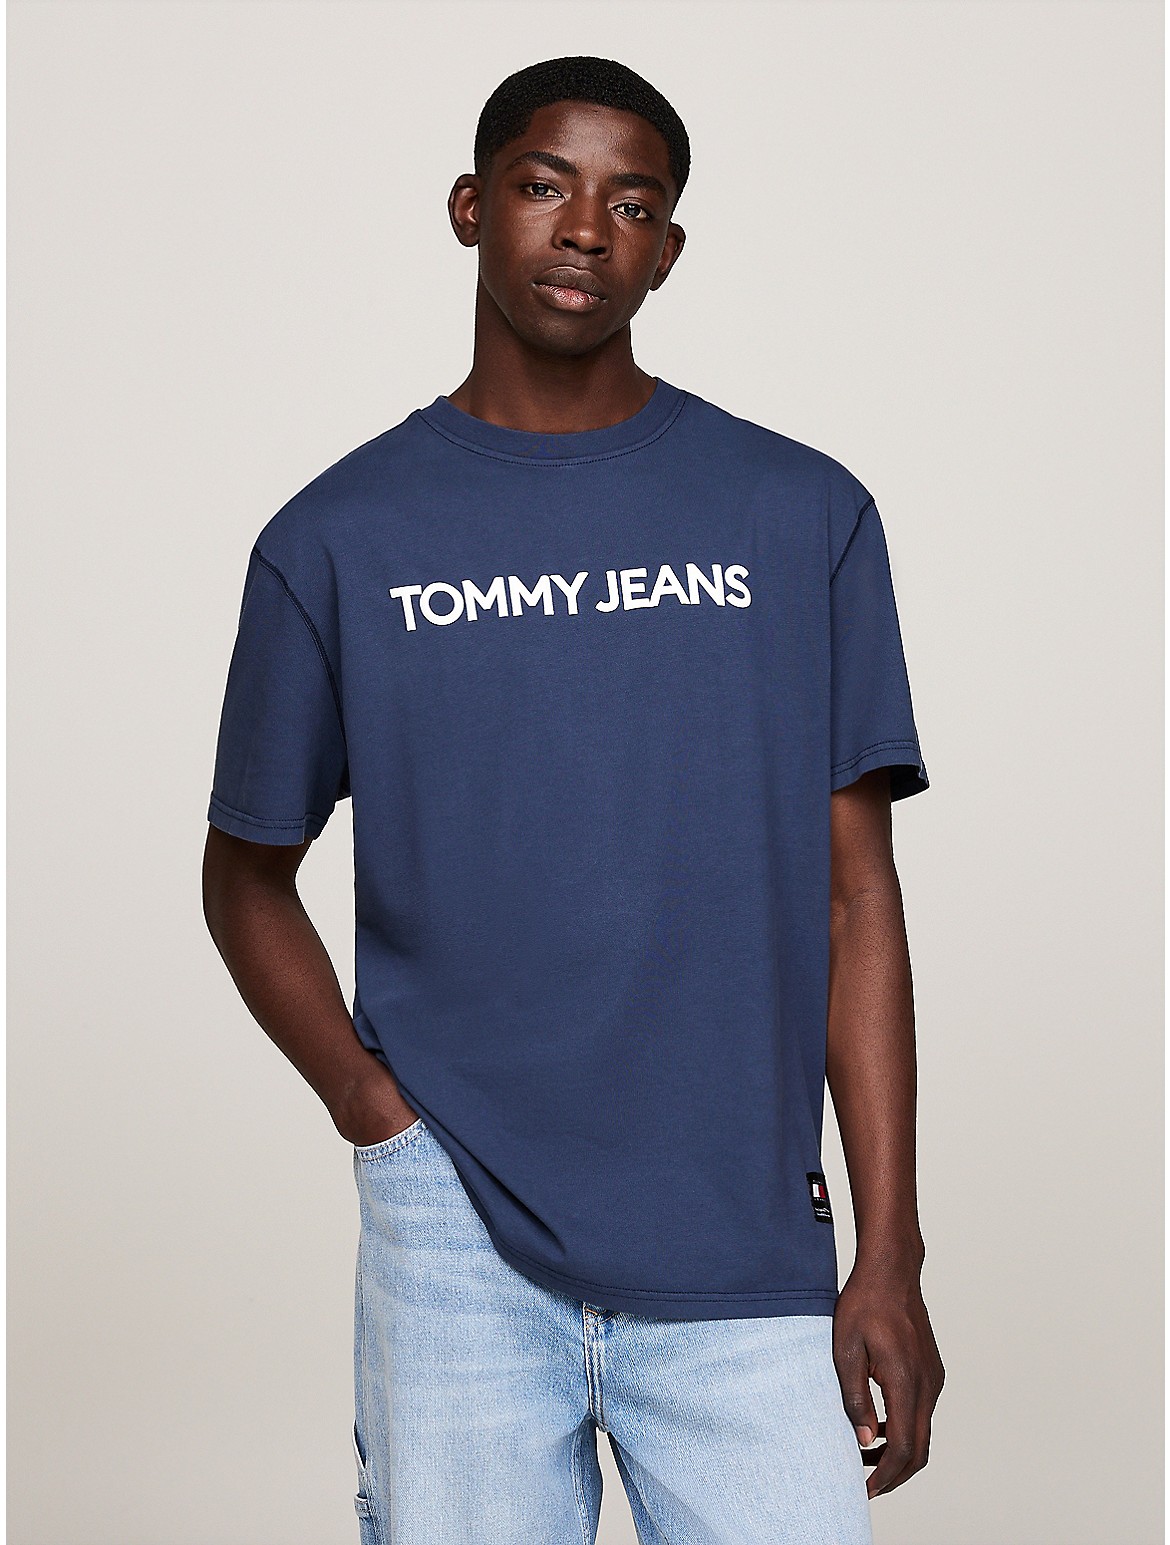 Tommy Hilfiger Men's TJ Embroidered Monotype Logo T-Shirt